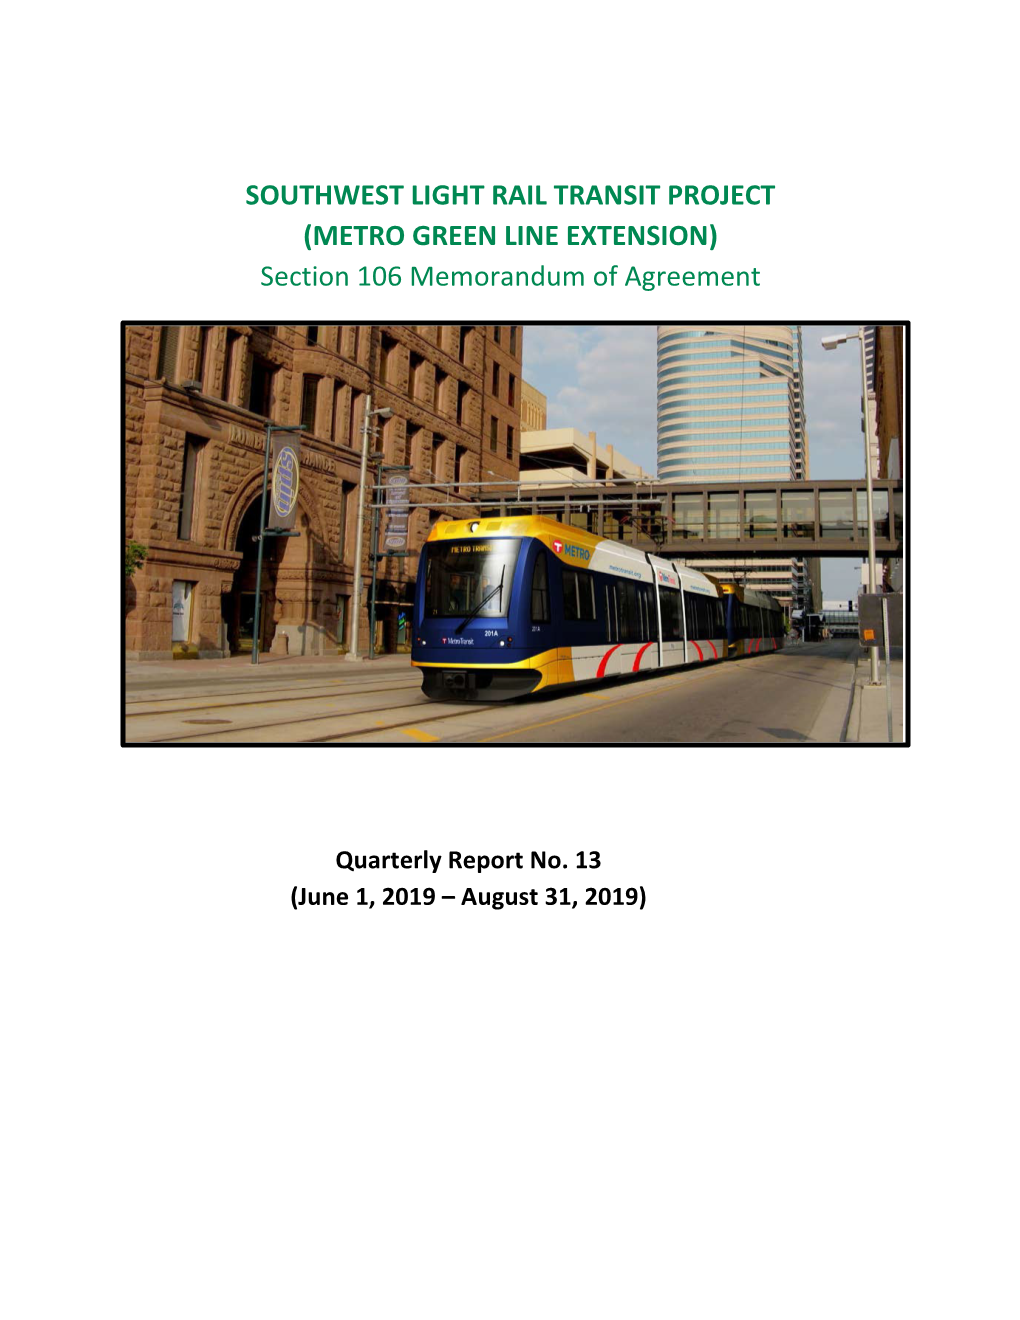 Southwest LRT Section 106 Quarterly Report